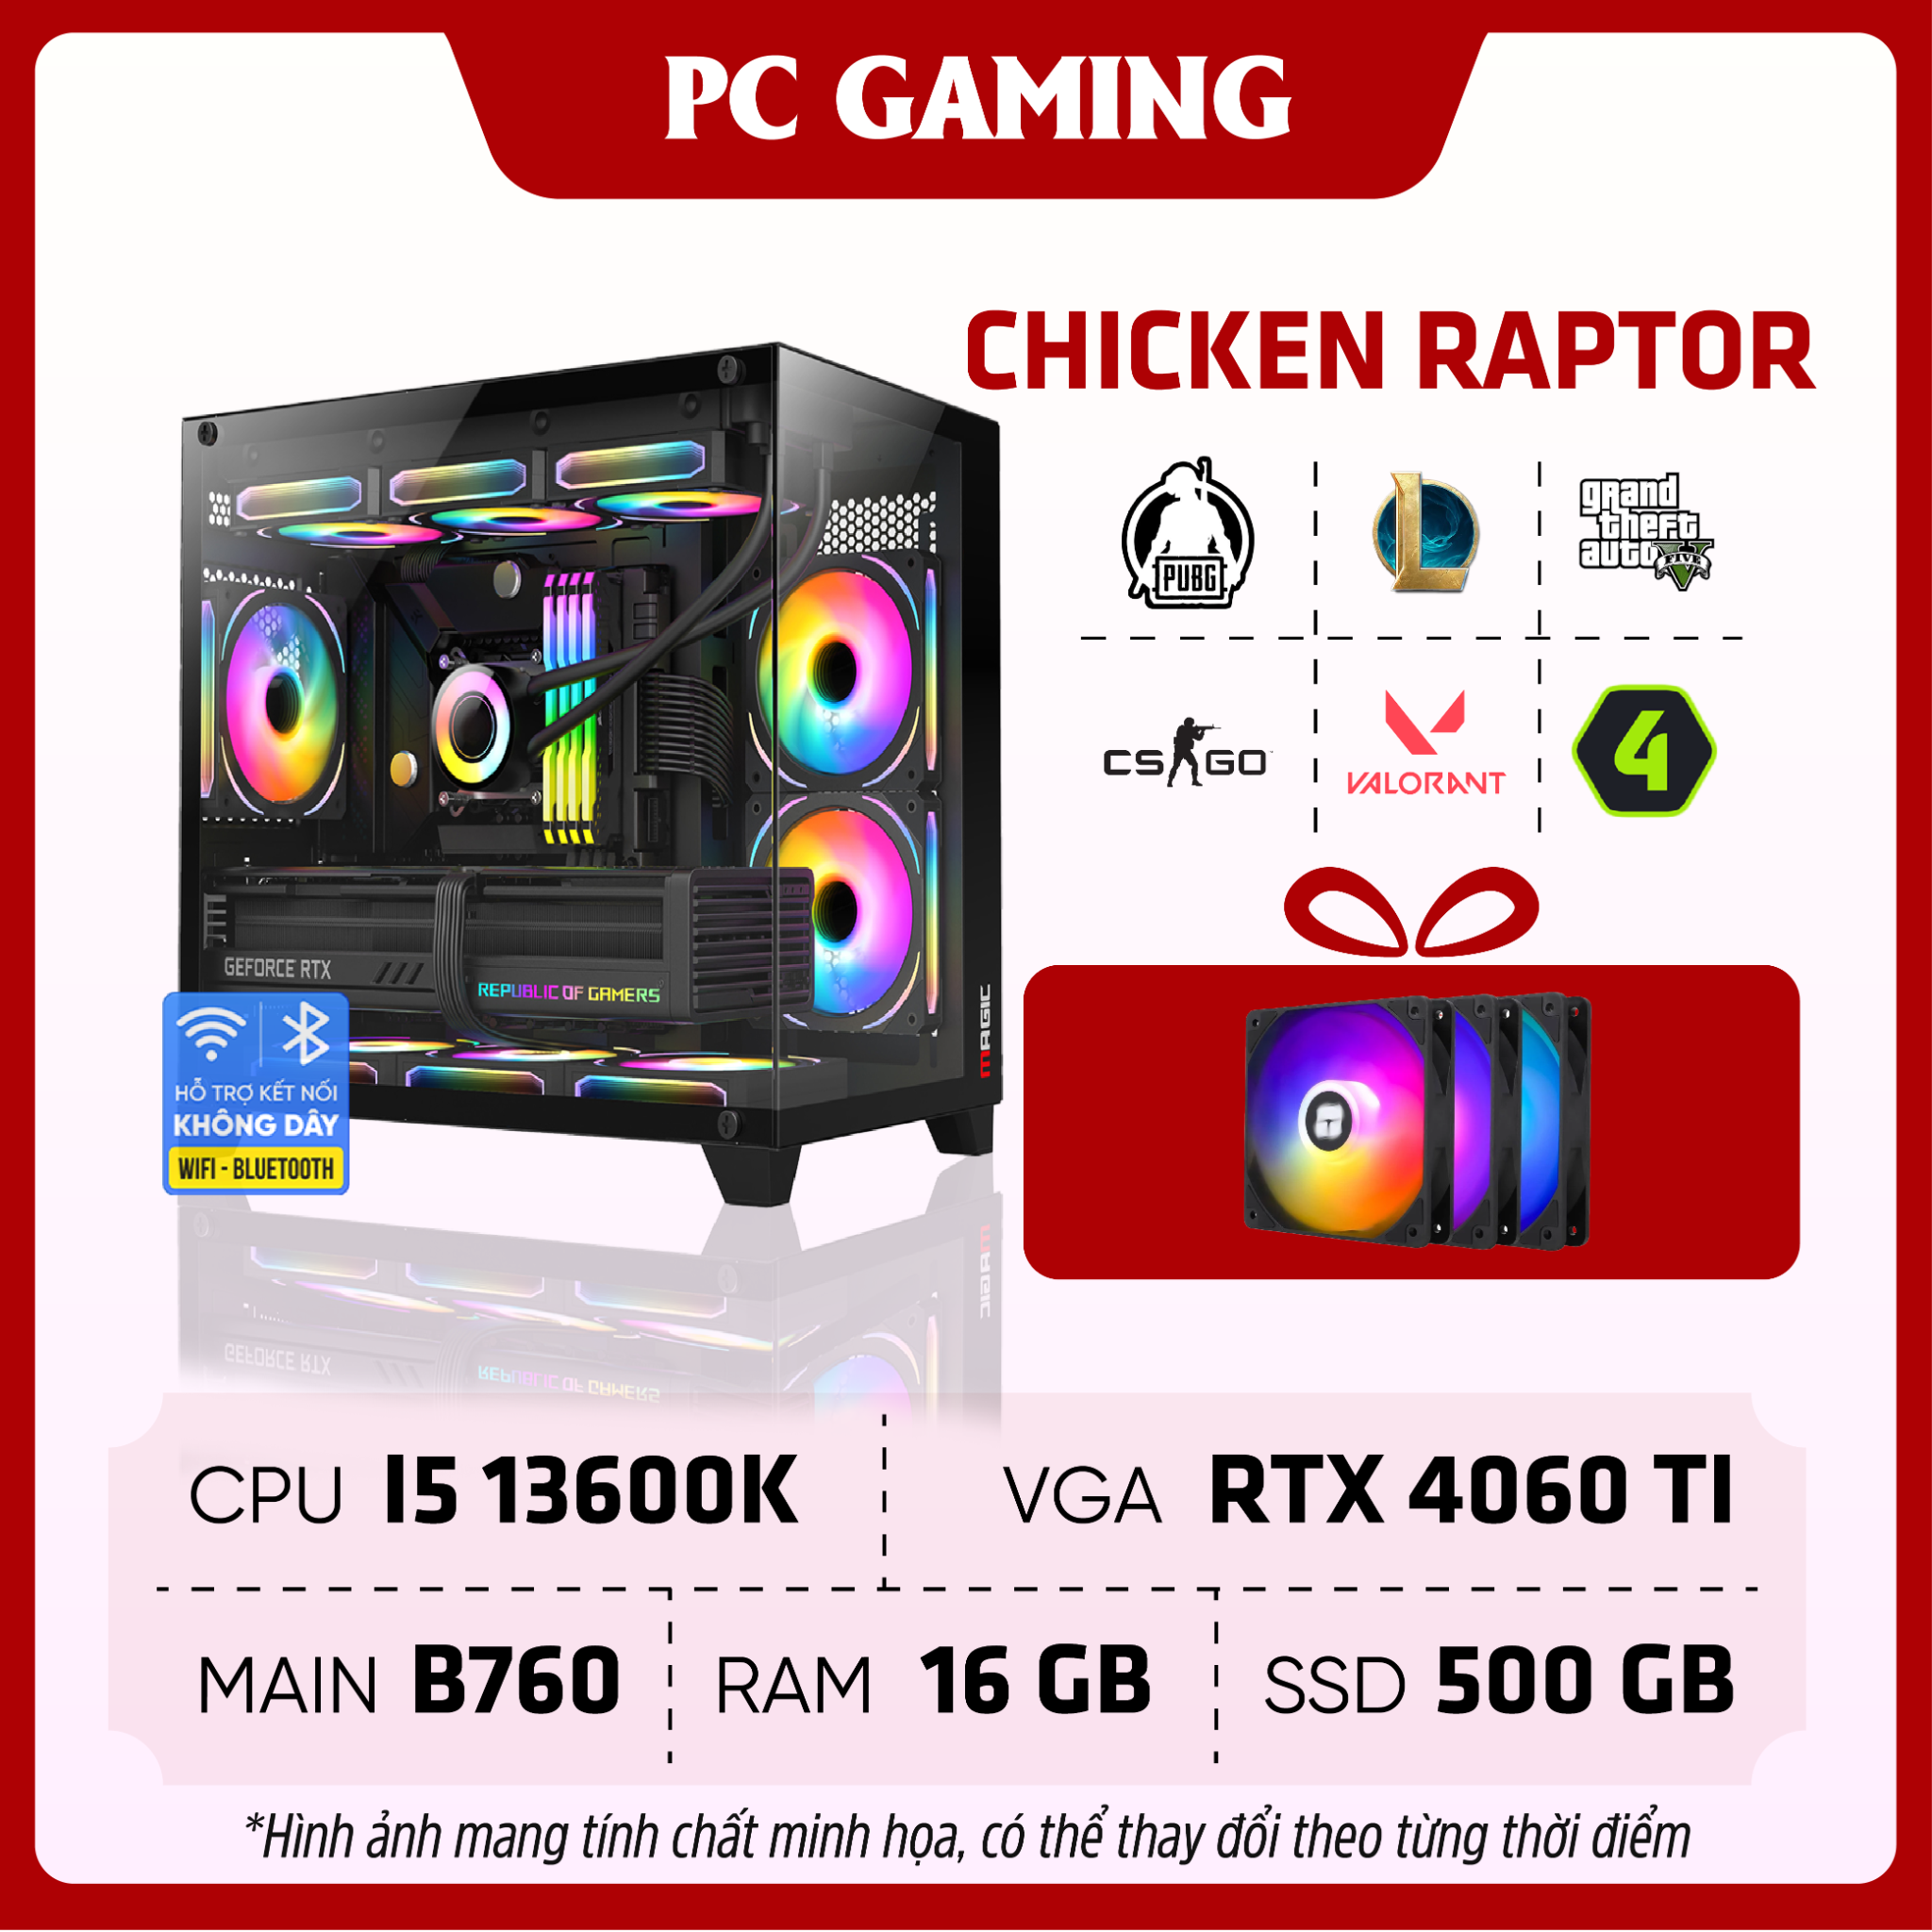 PC Gaming STAR CHICKEN RAPTOR | RTX 4060TI, Intel